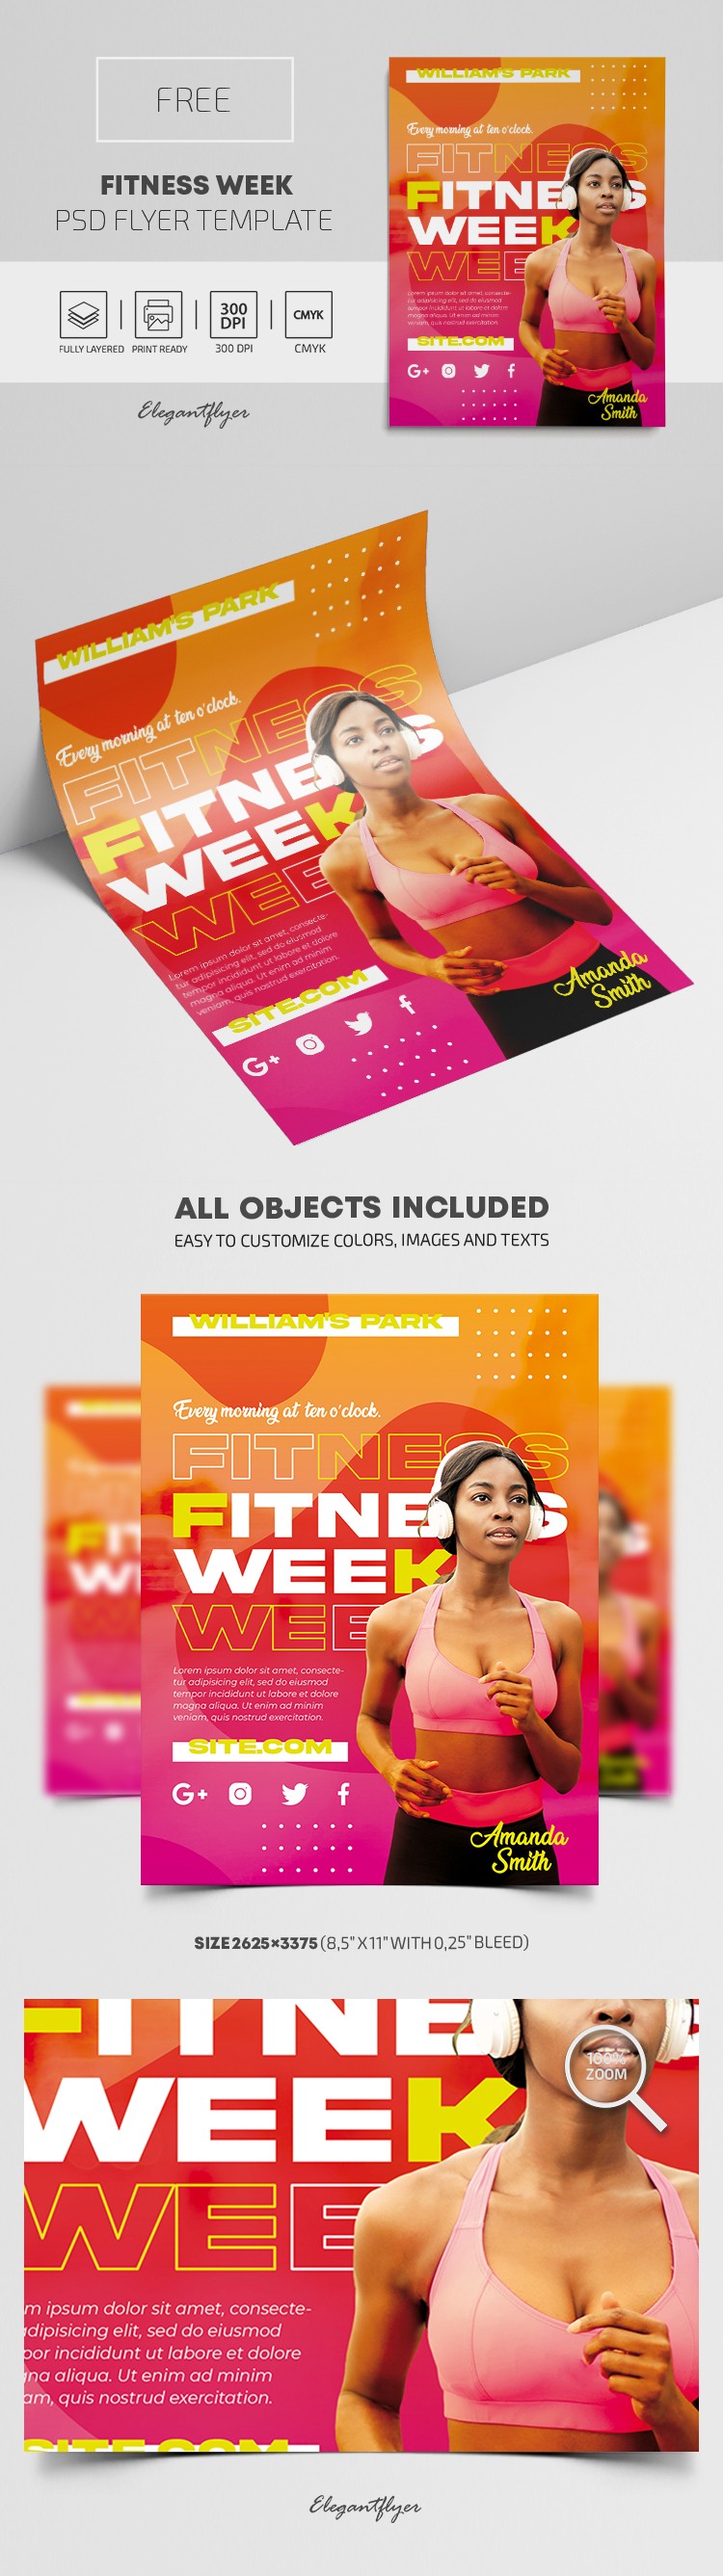 Fitness-Woche Flyer by ElegantFlyer